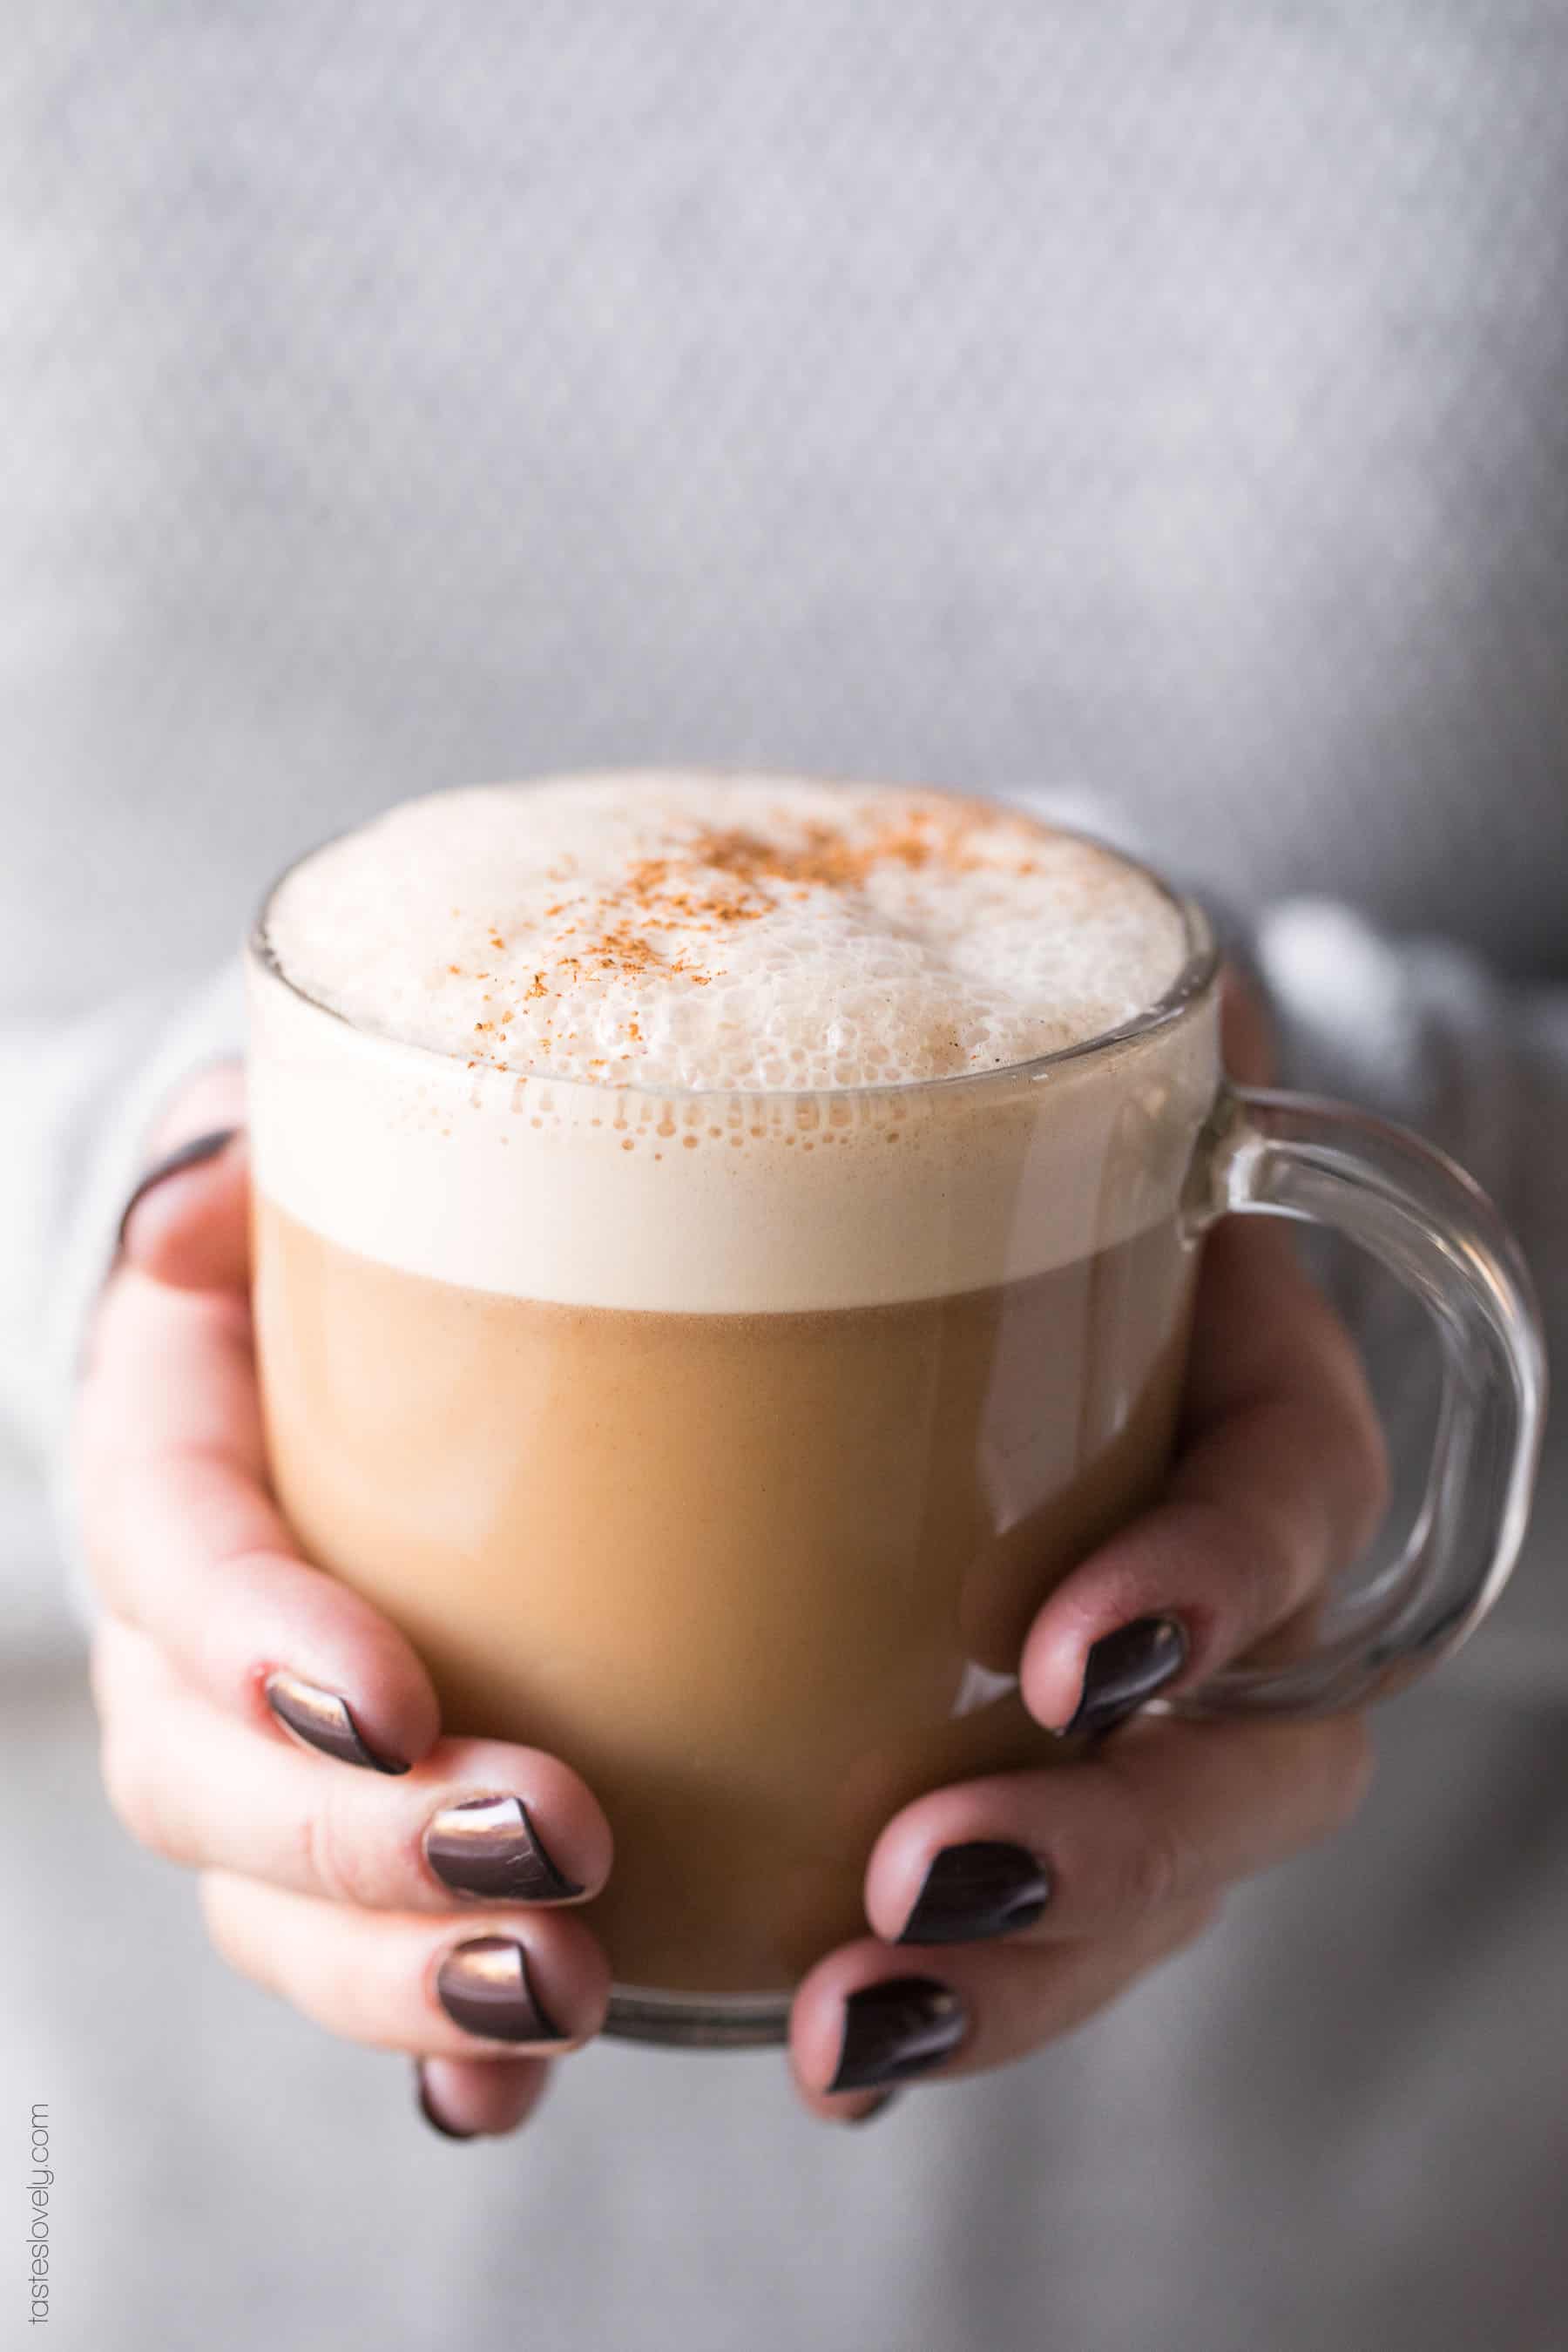 Paleo Almond Milk Chai Tea Latte (Dairy Free). Made in your blender!